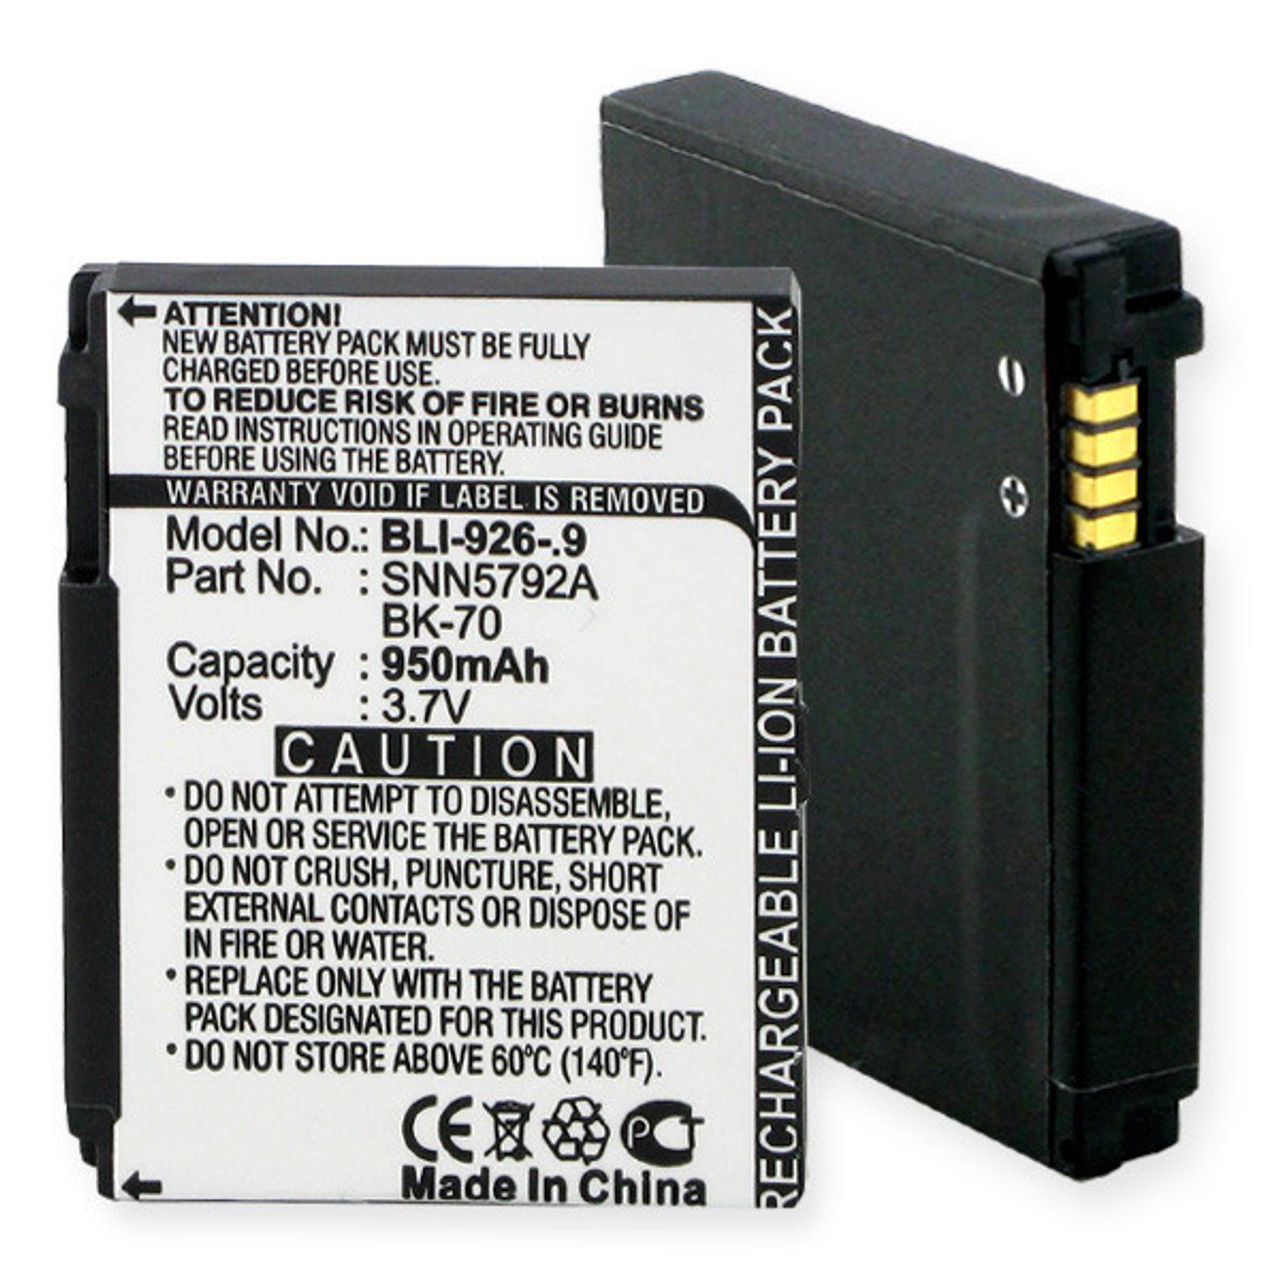 Motorola MOTOROLA V750 and 950 LI-ION 950mAh Cellular Battery